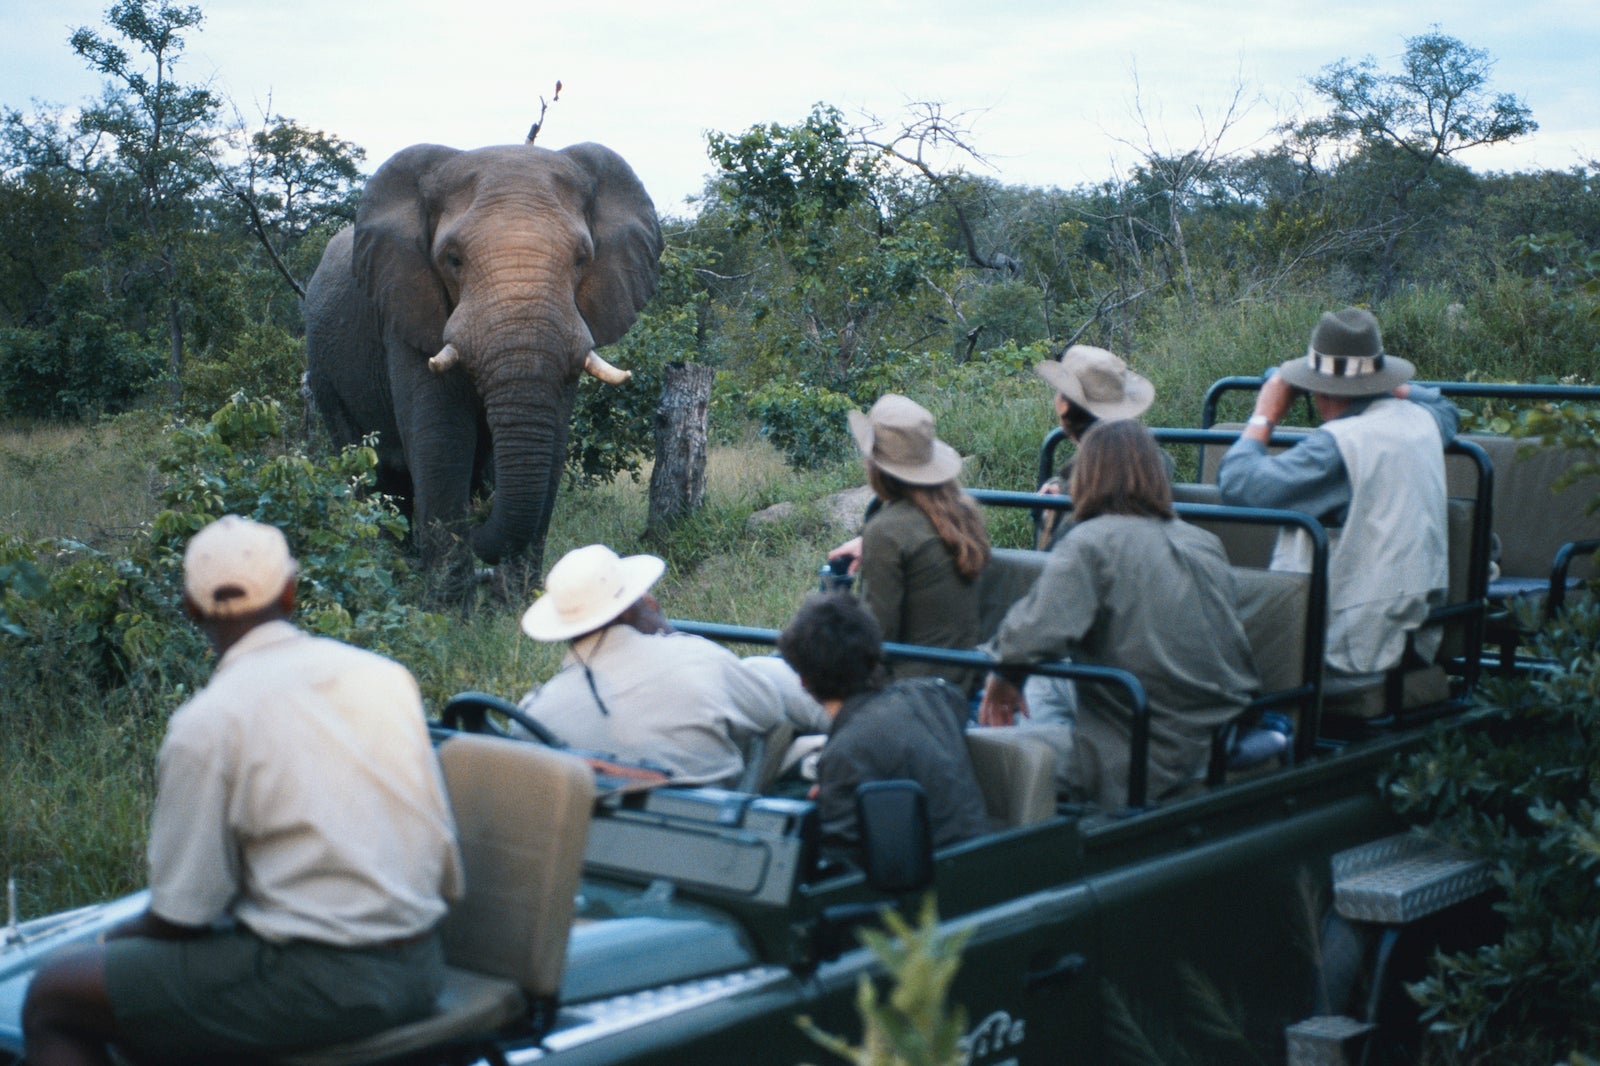 go on a safari in africa